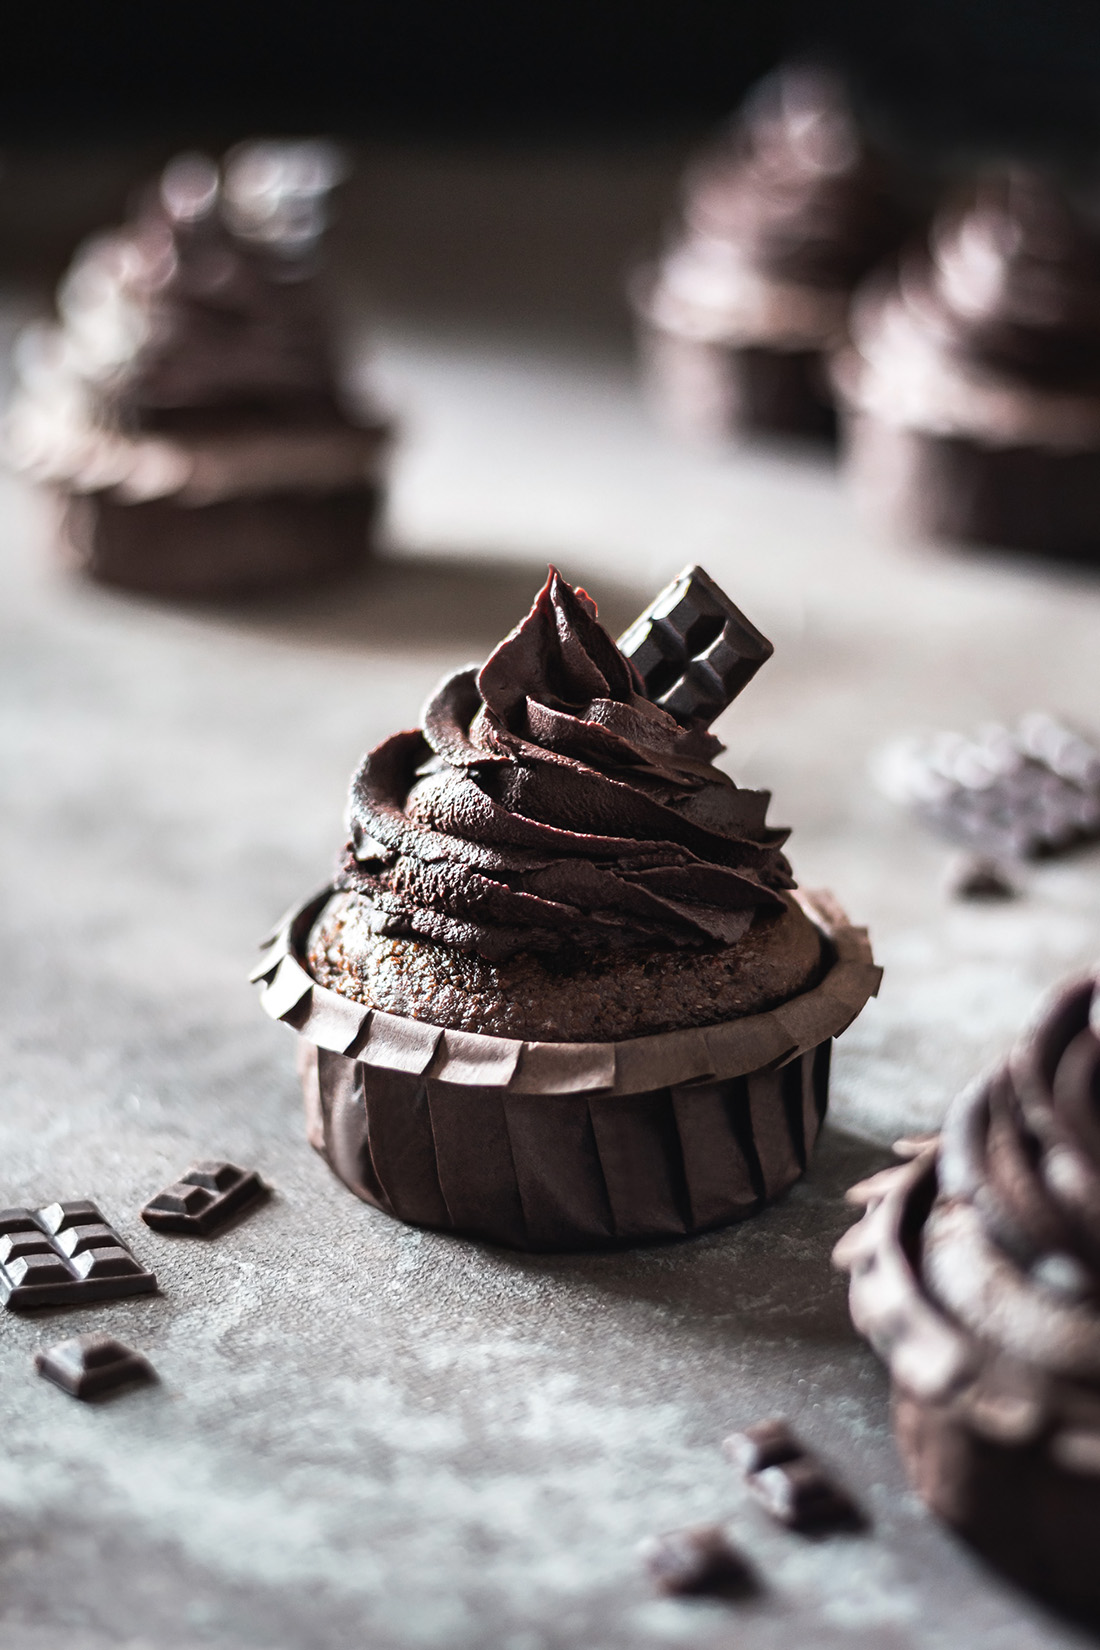 Chocolate Cupcakes with Blackcurrant Ganache (Vegan)